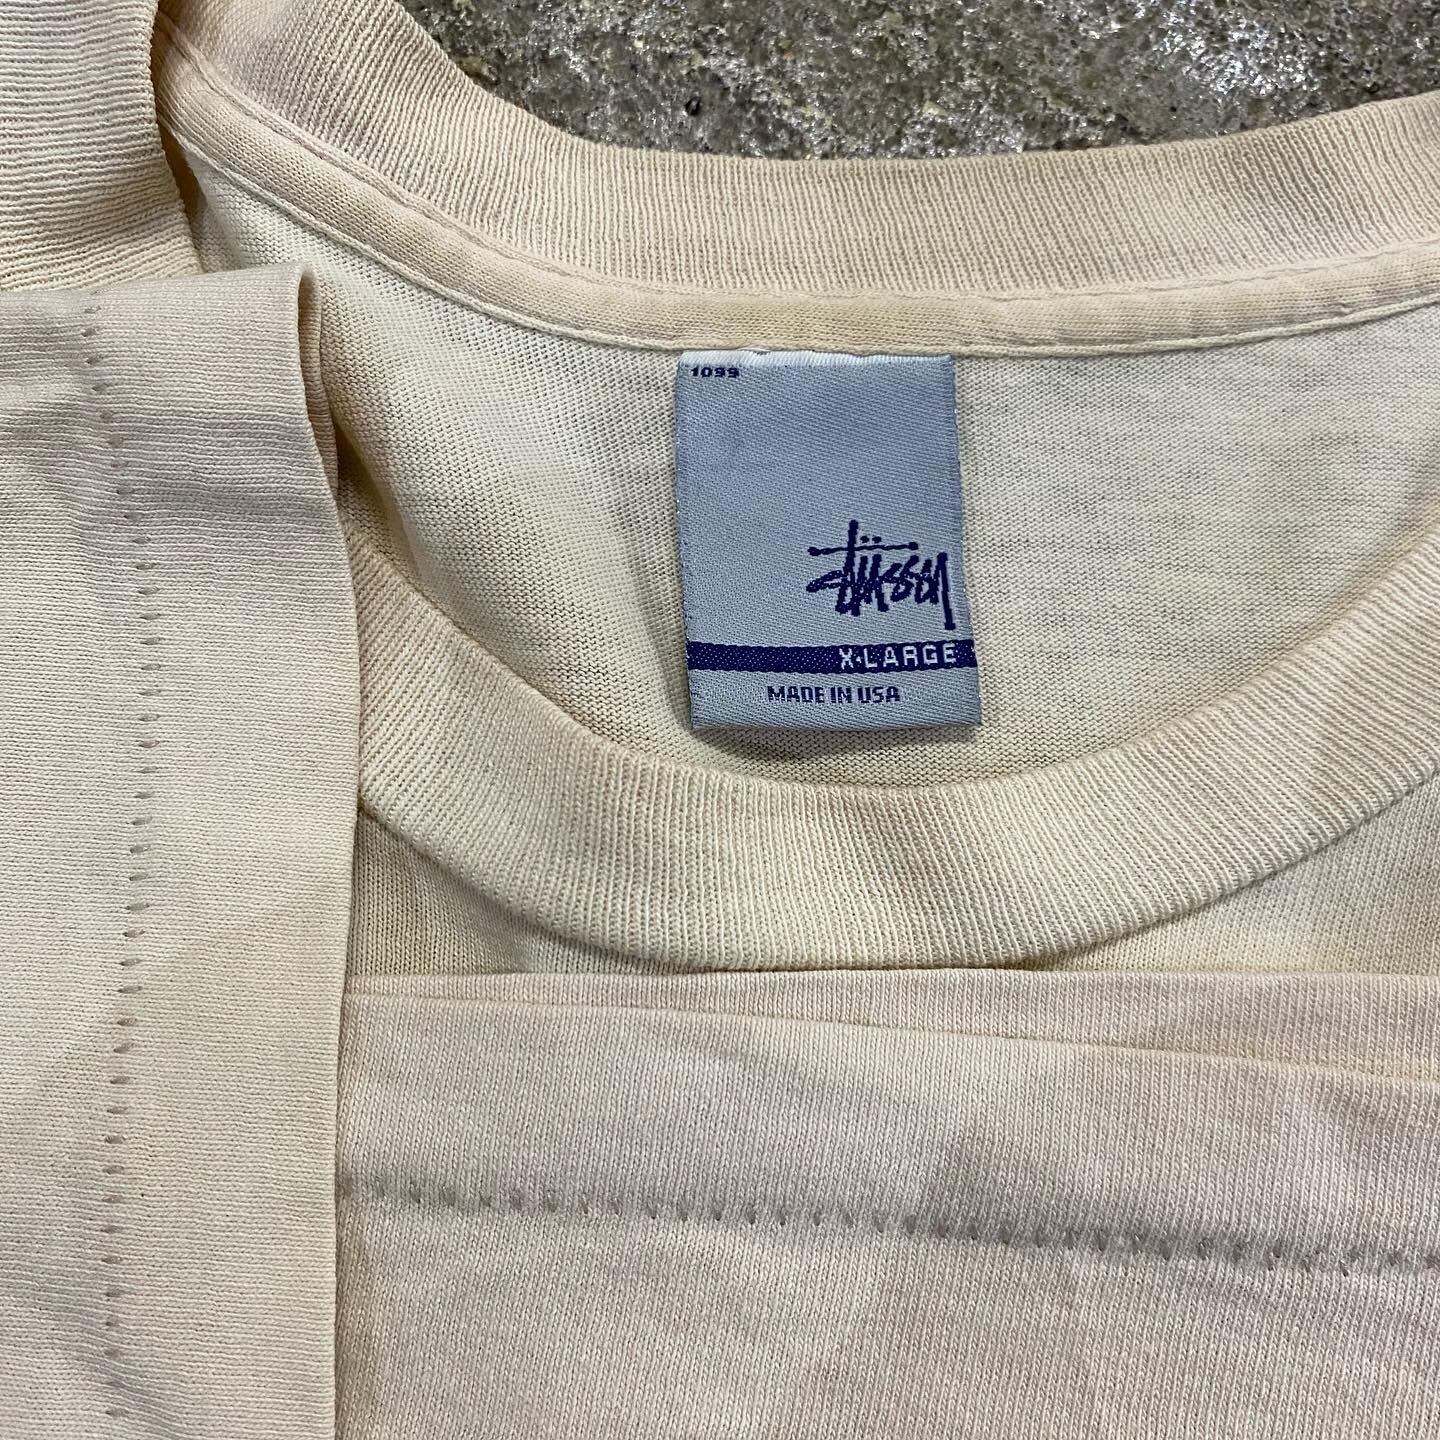 Sale4Style Vintage Stussy Monogram T Shirt